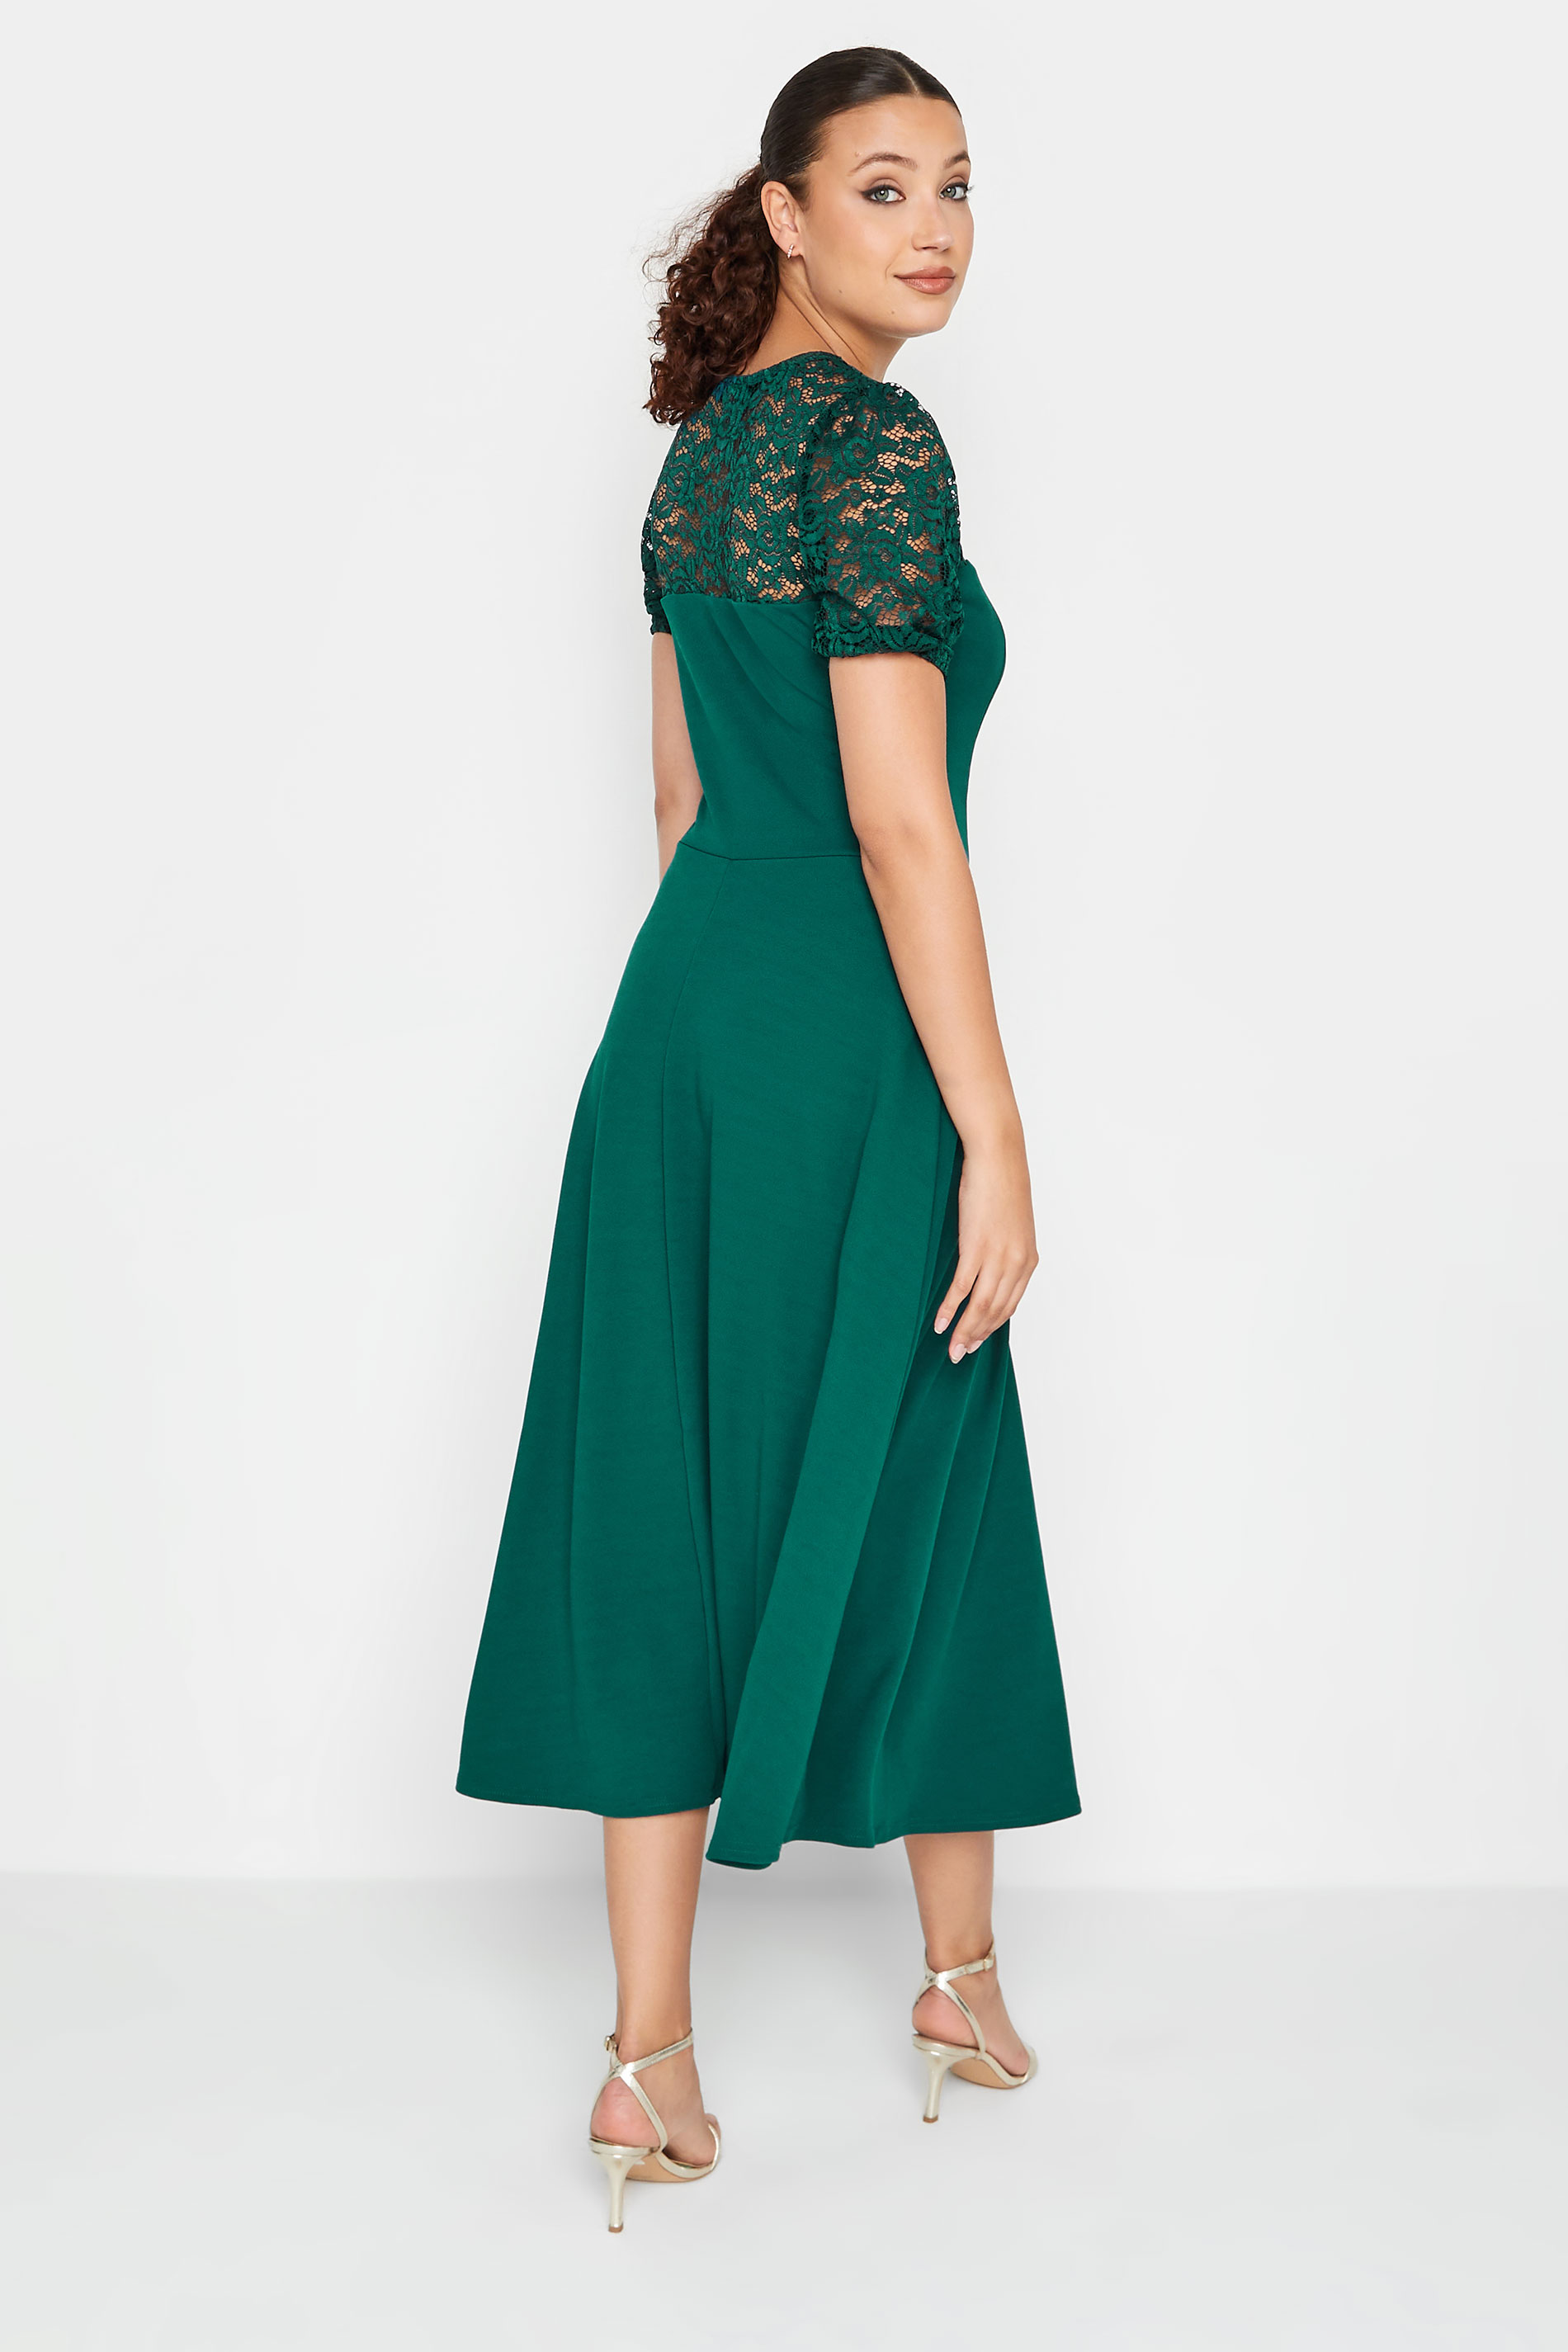 Tall Women's LTS Forest Green Lace Midi Dress | Long Tall Sally 3